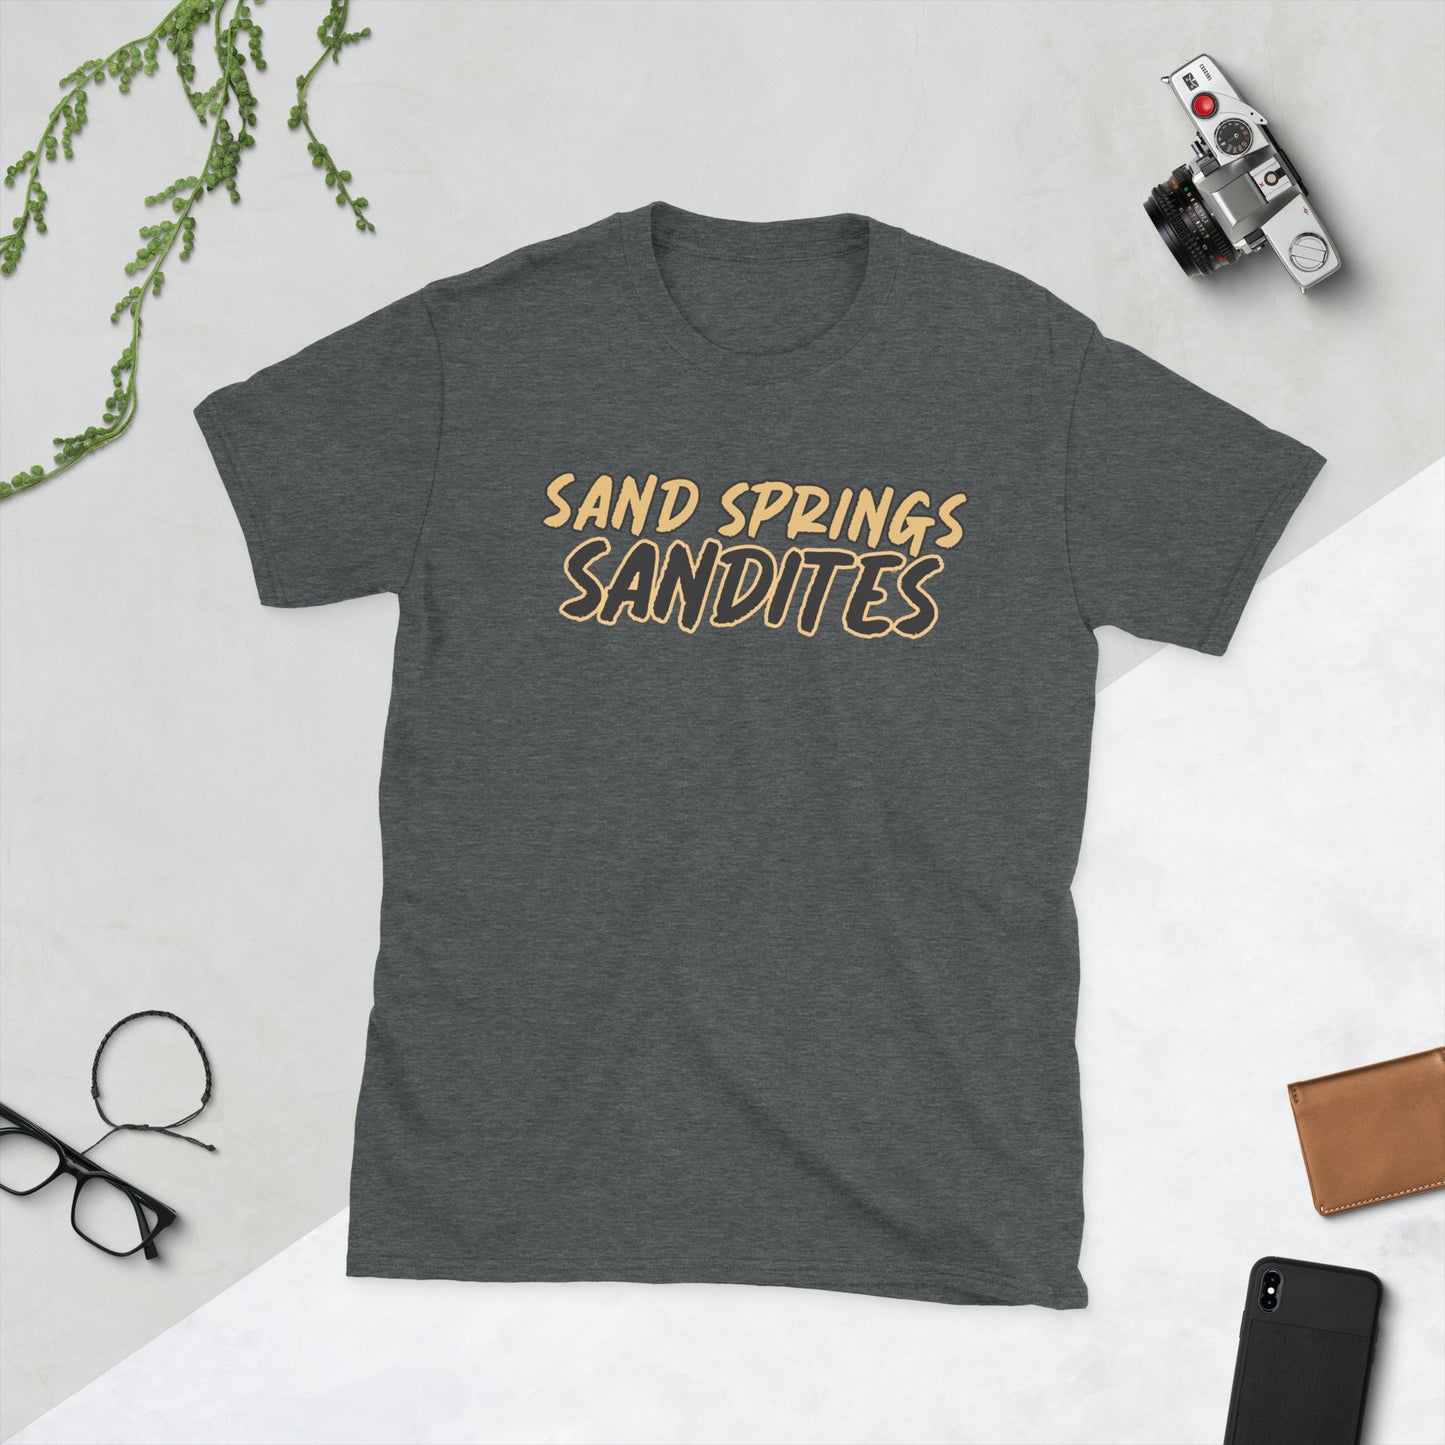 Sand Springs Sandites - Adult T-Shirt